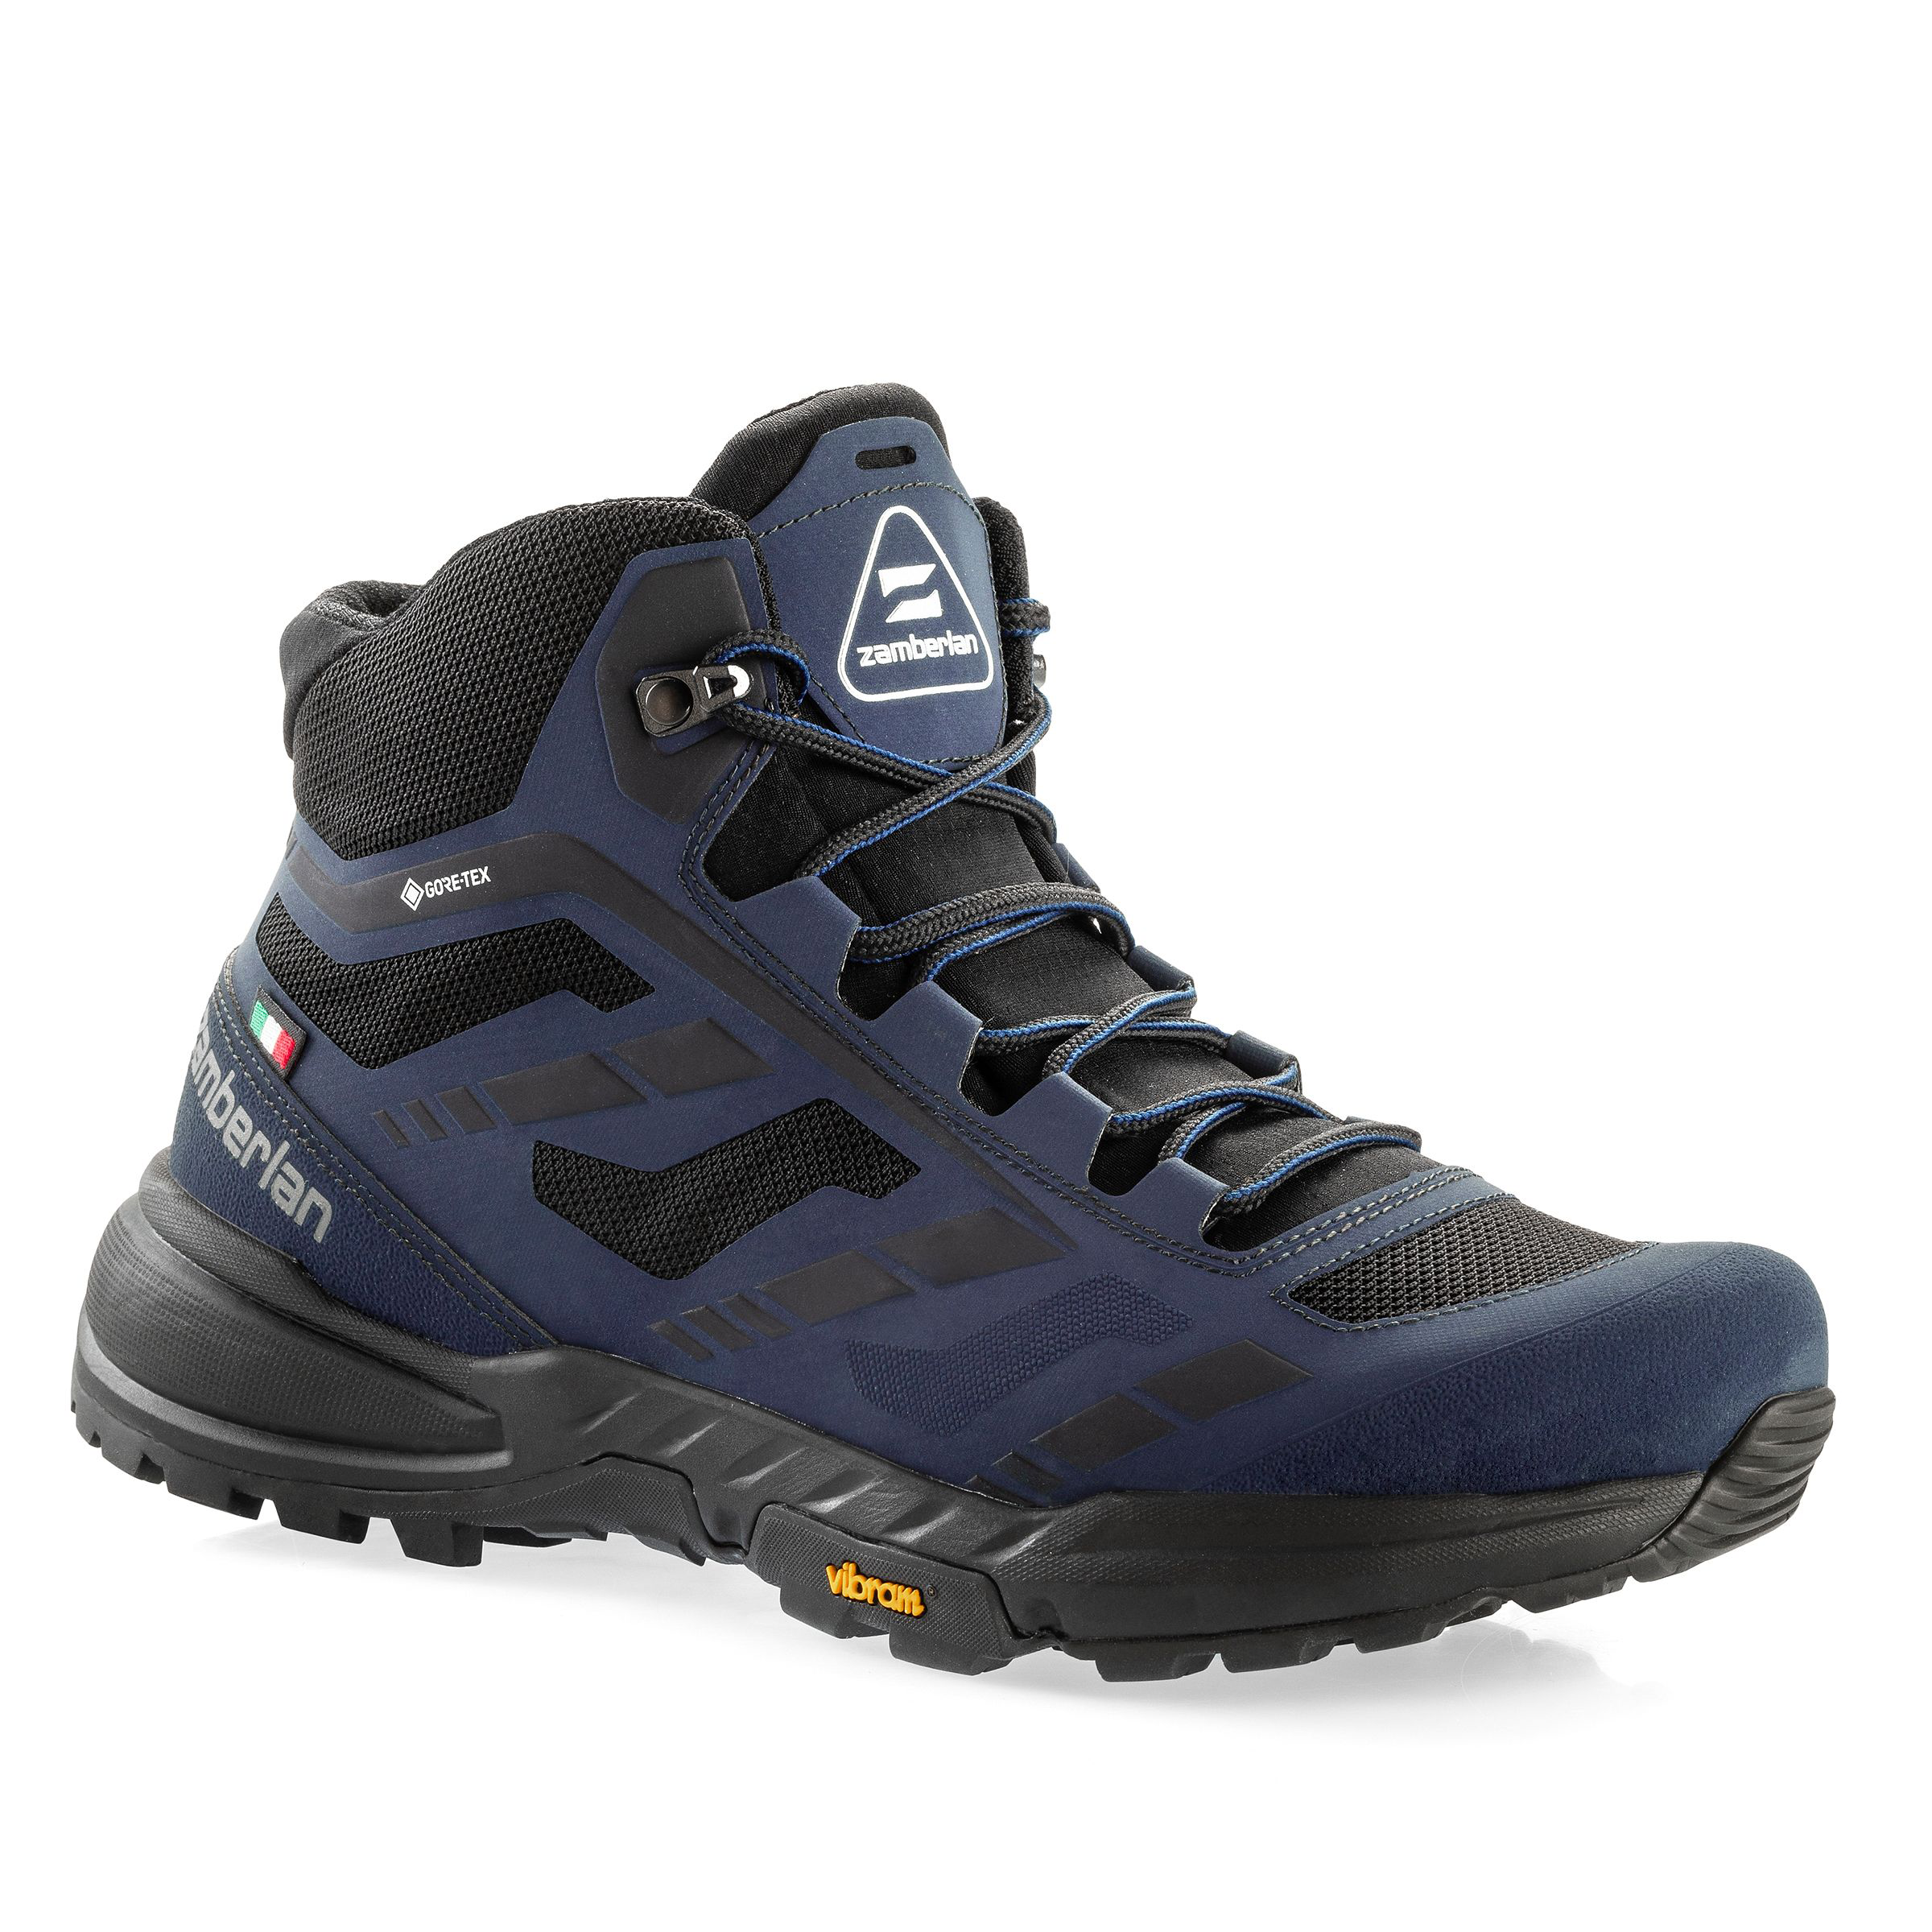 Zamberlan 219 Anabasis GTX Waterproof Mid Hiking Boots for Men - Blue - 11.5M